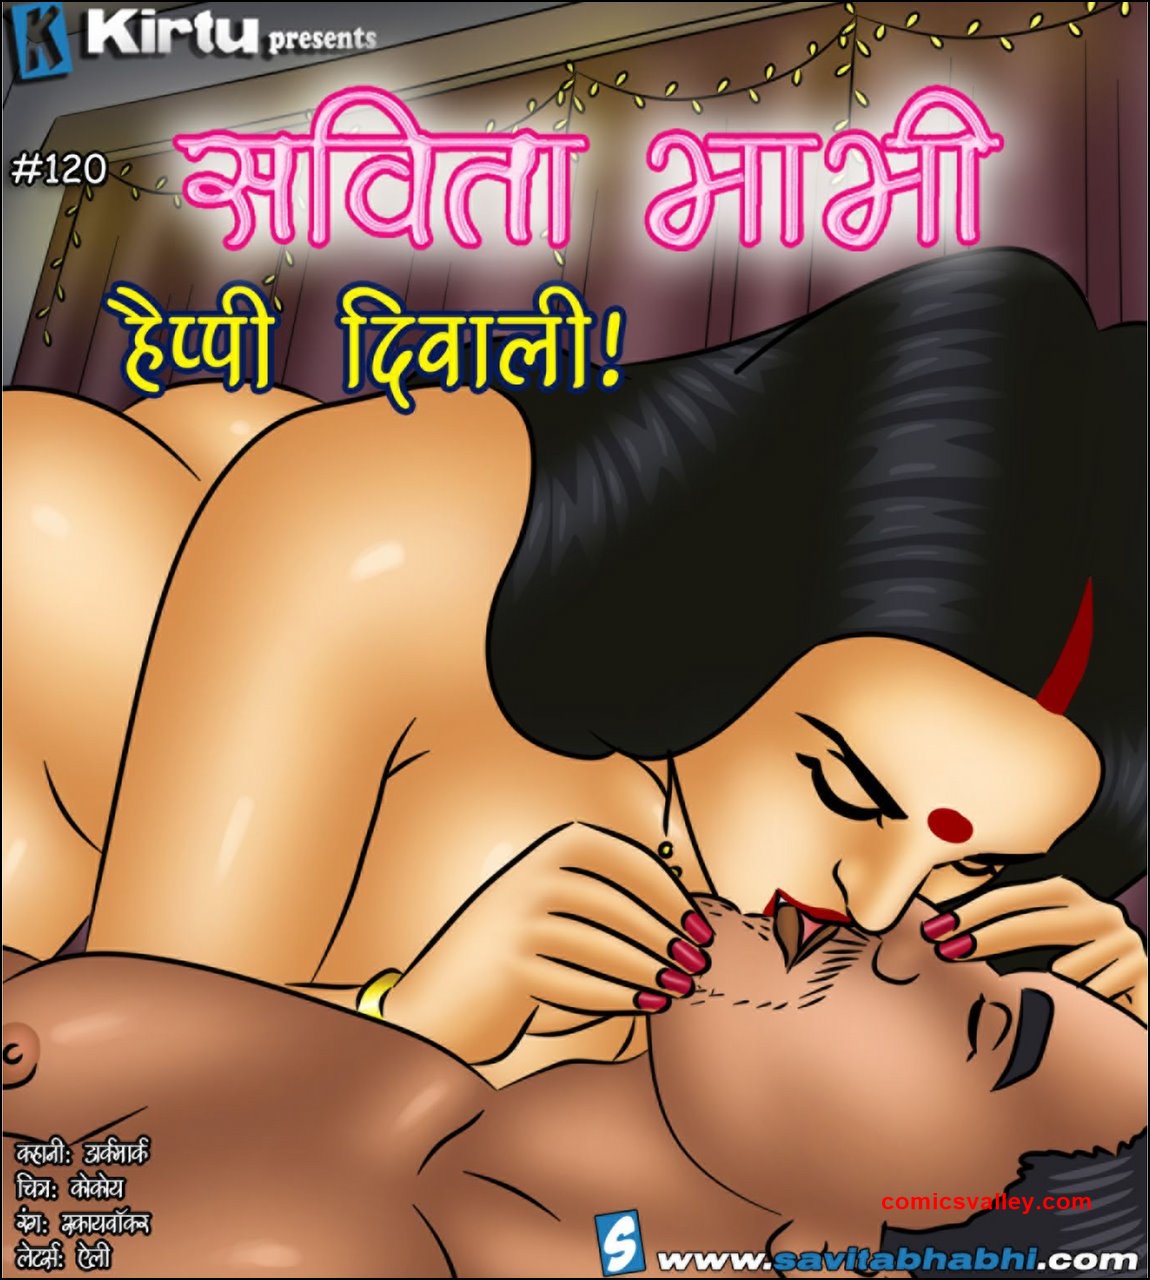 Series] savita [kirtu ep 1 bhabhi comics Fan Series